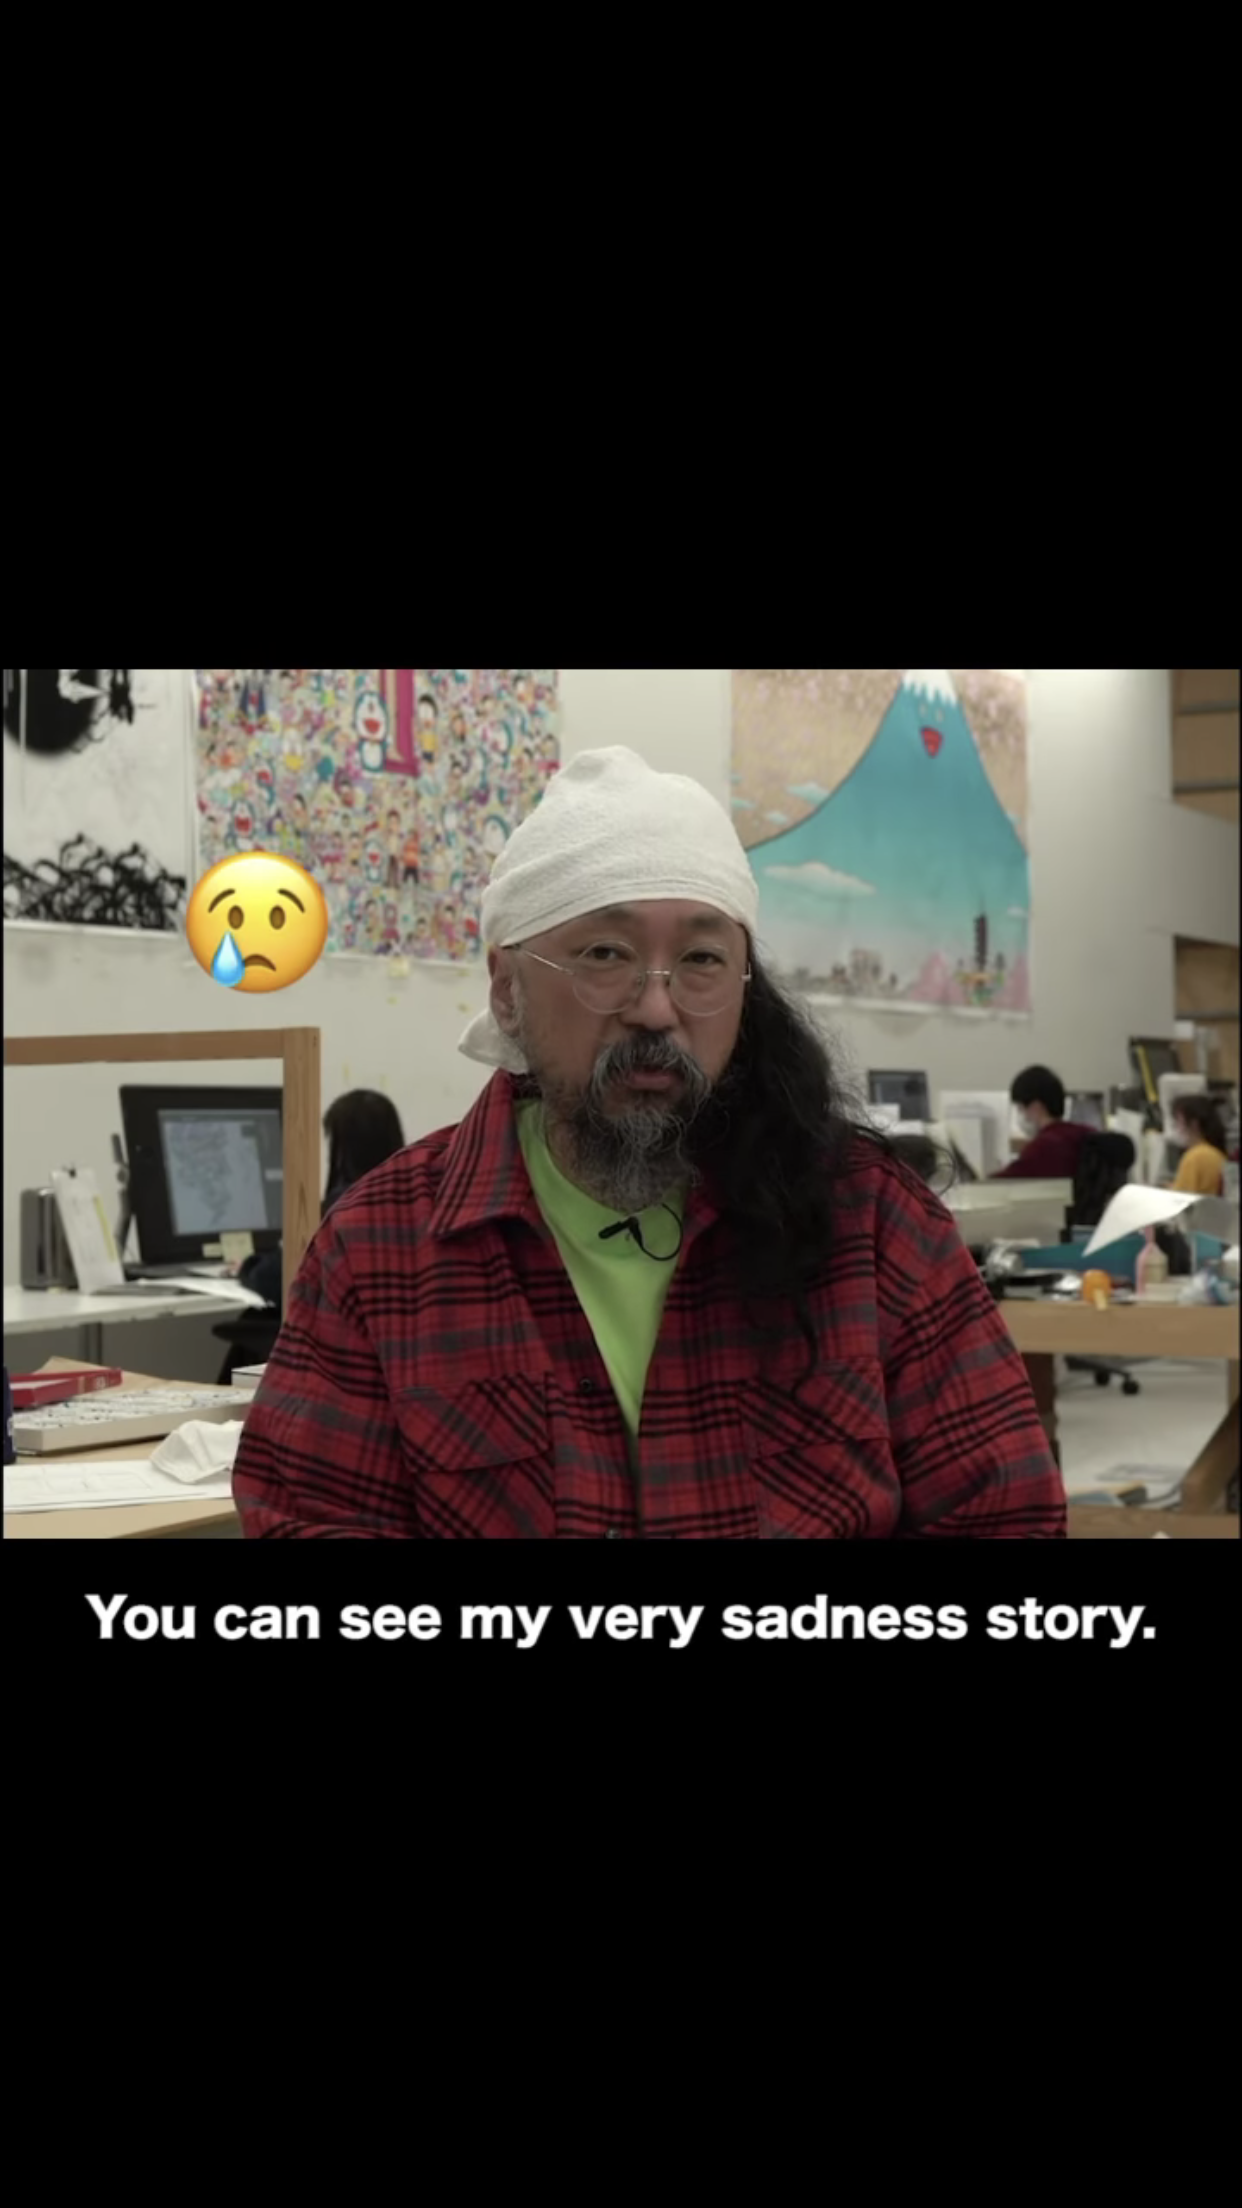 Takashi Murakami Revives His Sneaker Project